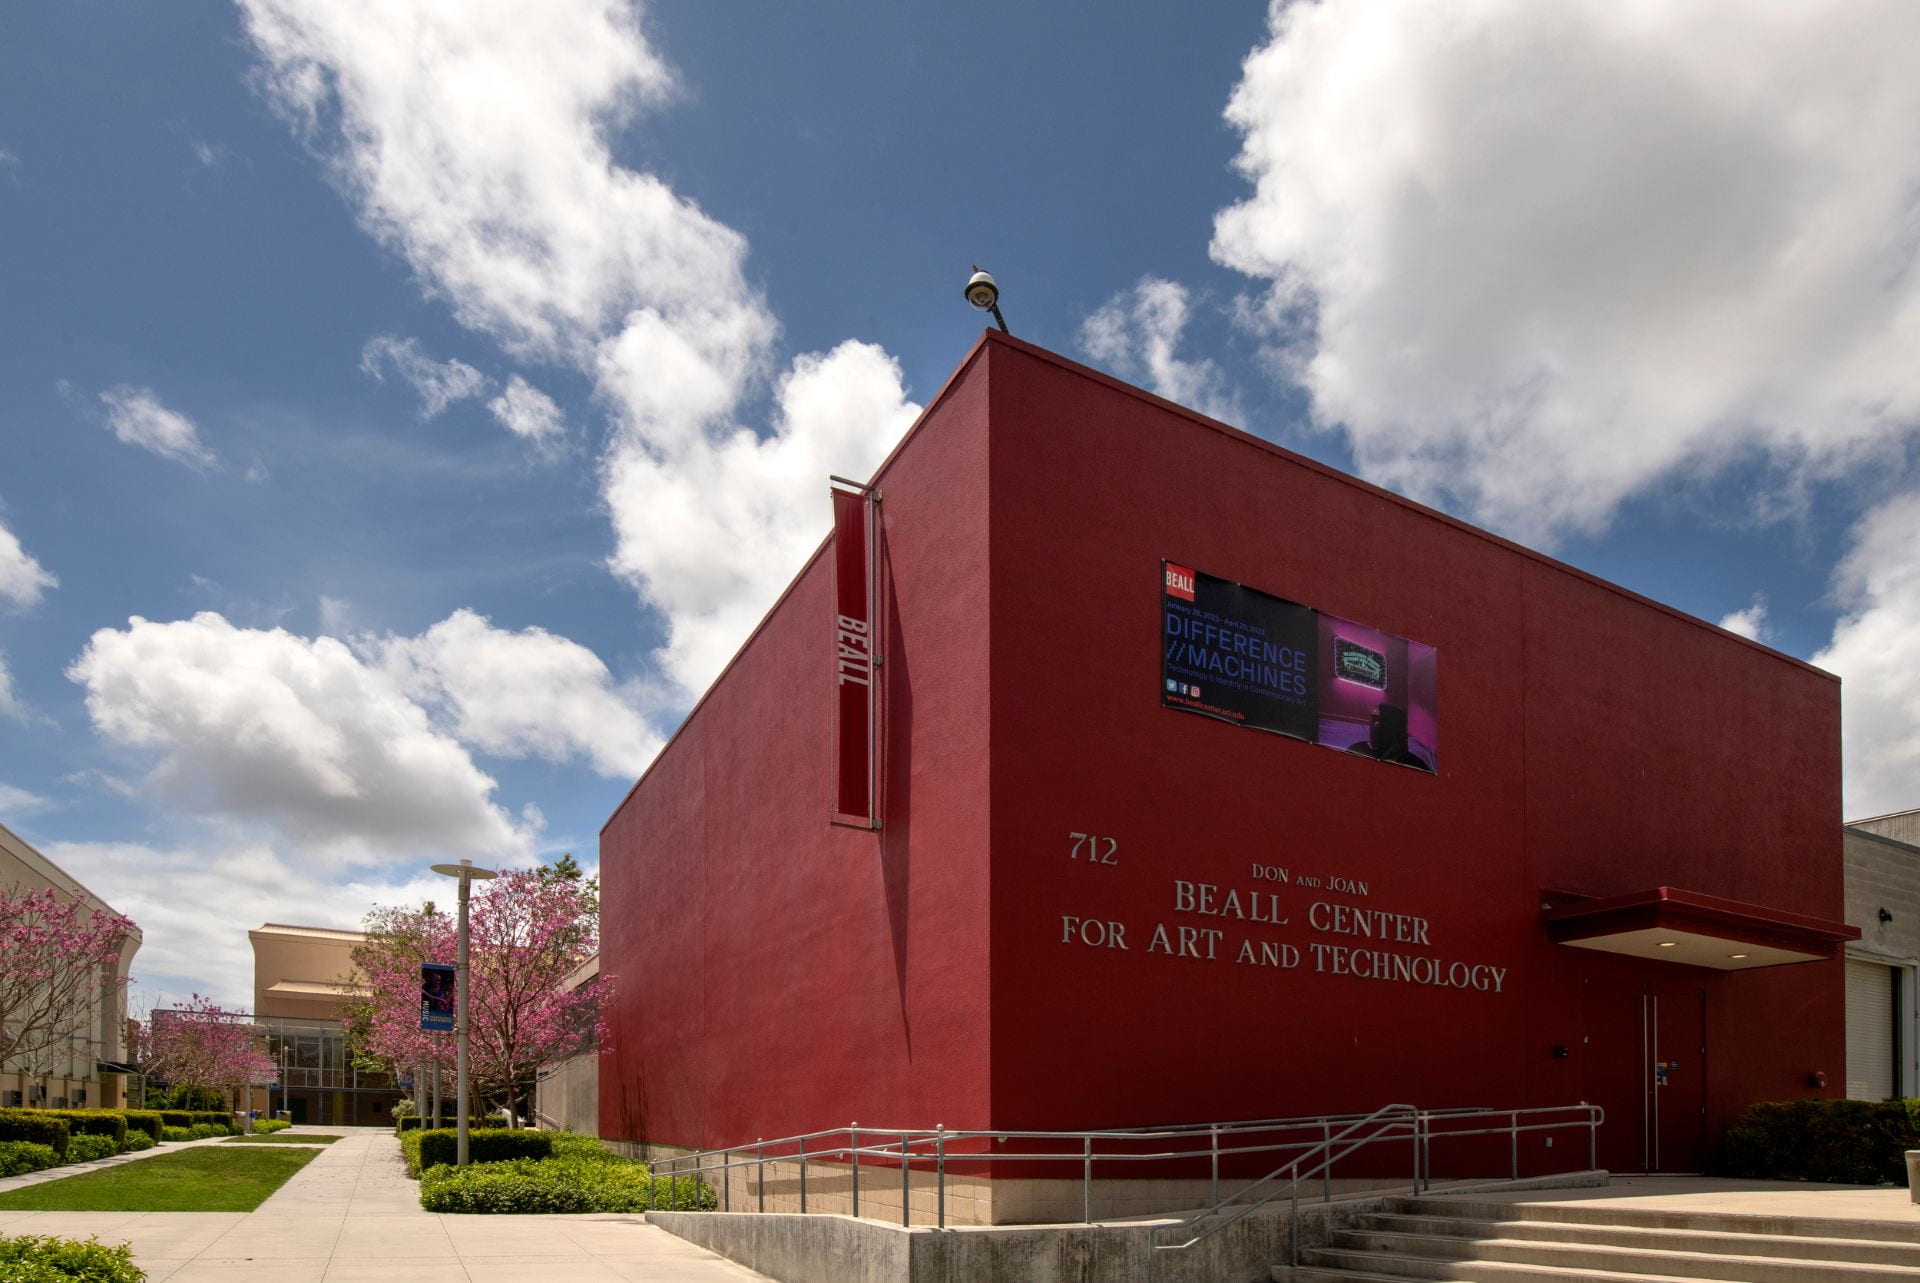 Beall Center for Art and Technology